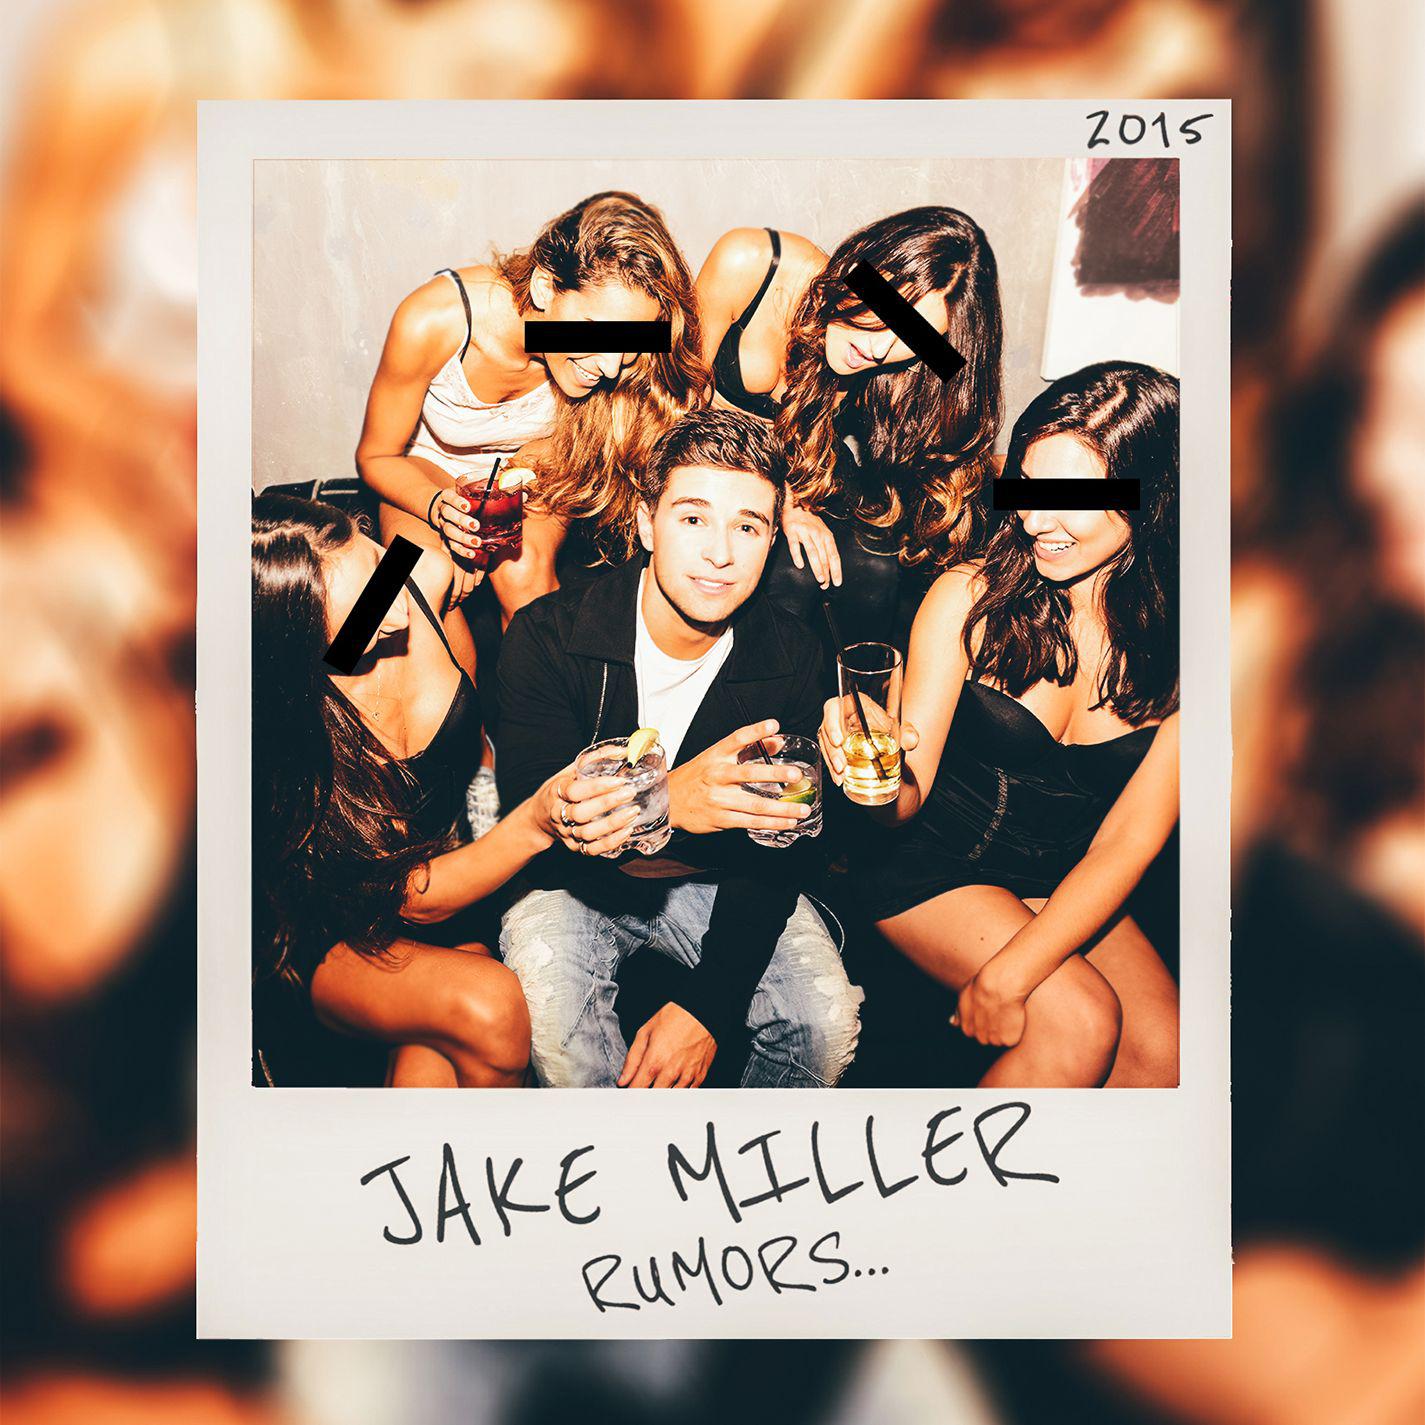 Rumors歌词 歌手Jake Miller-专辑Rumors-单曲《Rumors》LRC歌词下载